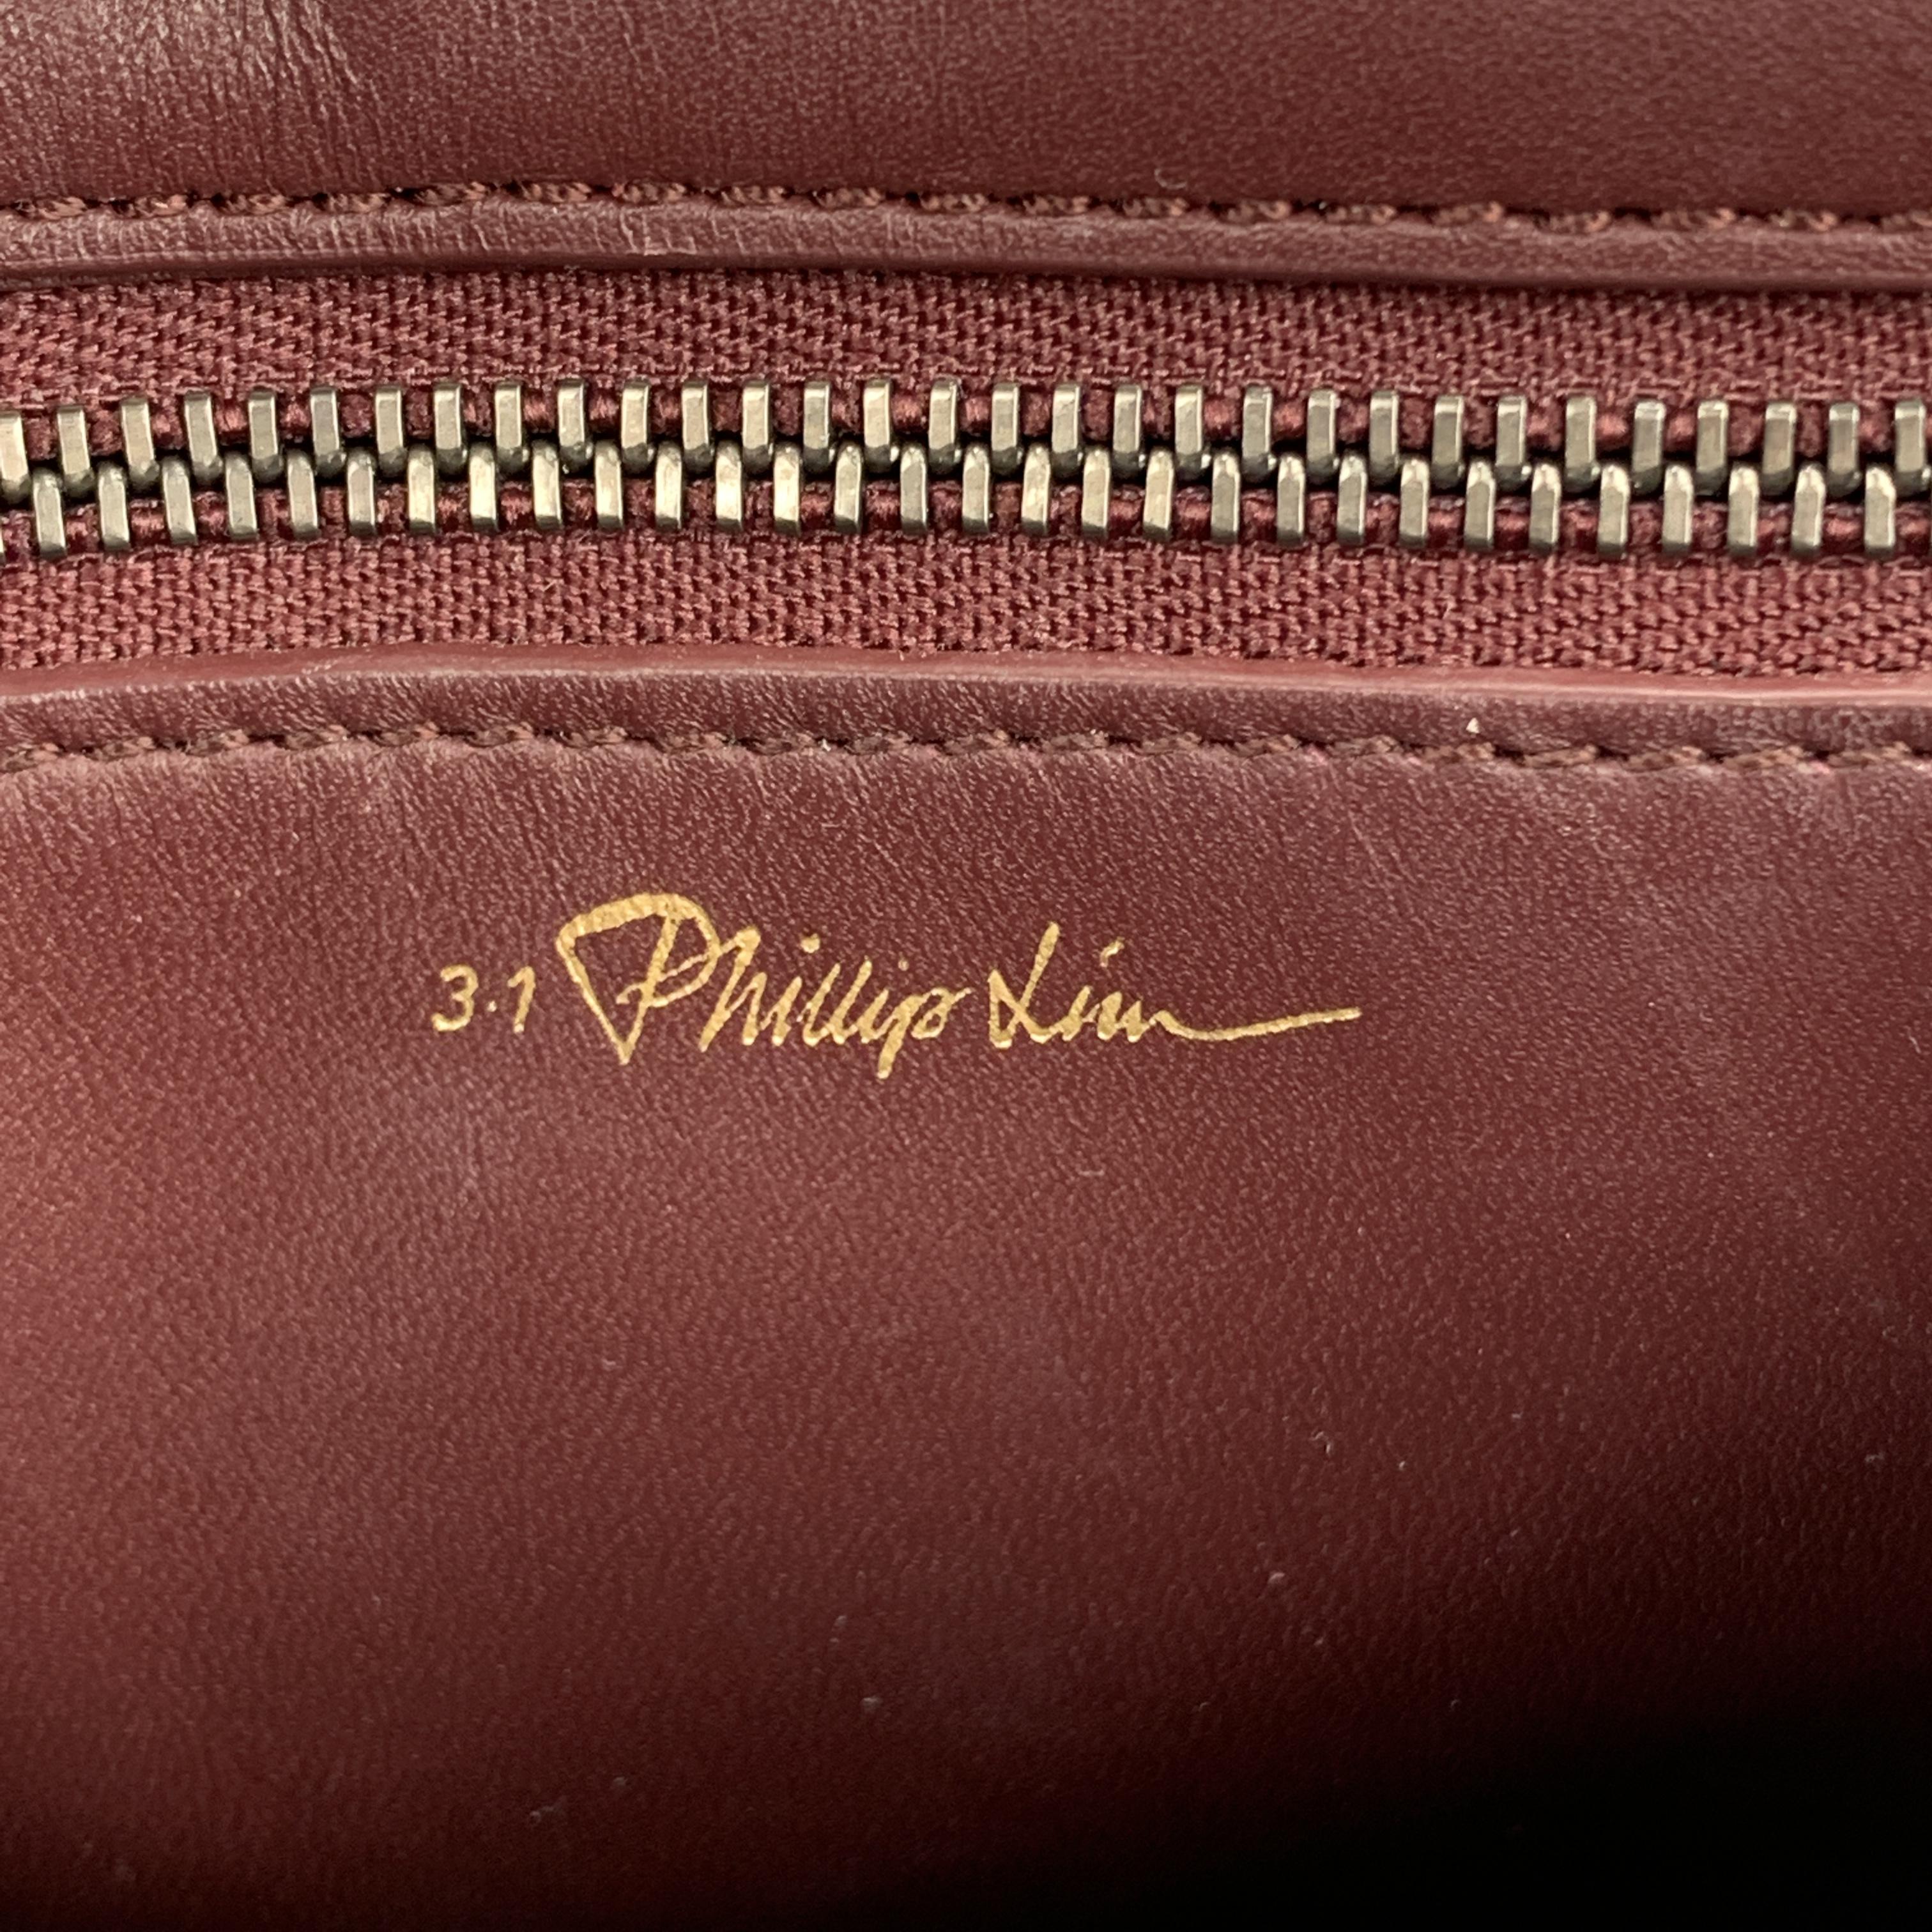 3.1 PHILLIP LIM Burgundy Leather CASH ONLY Clutch Handbag 7